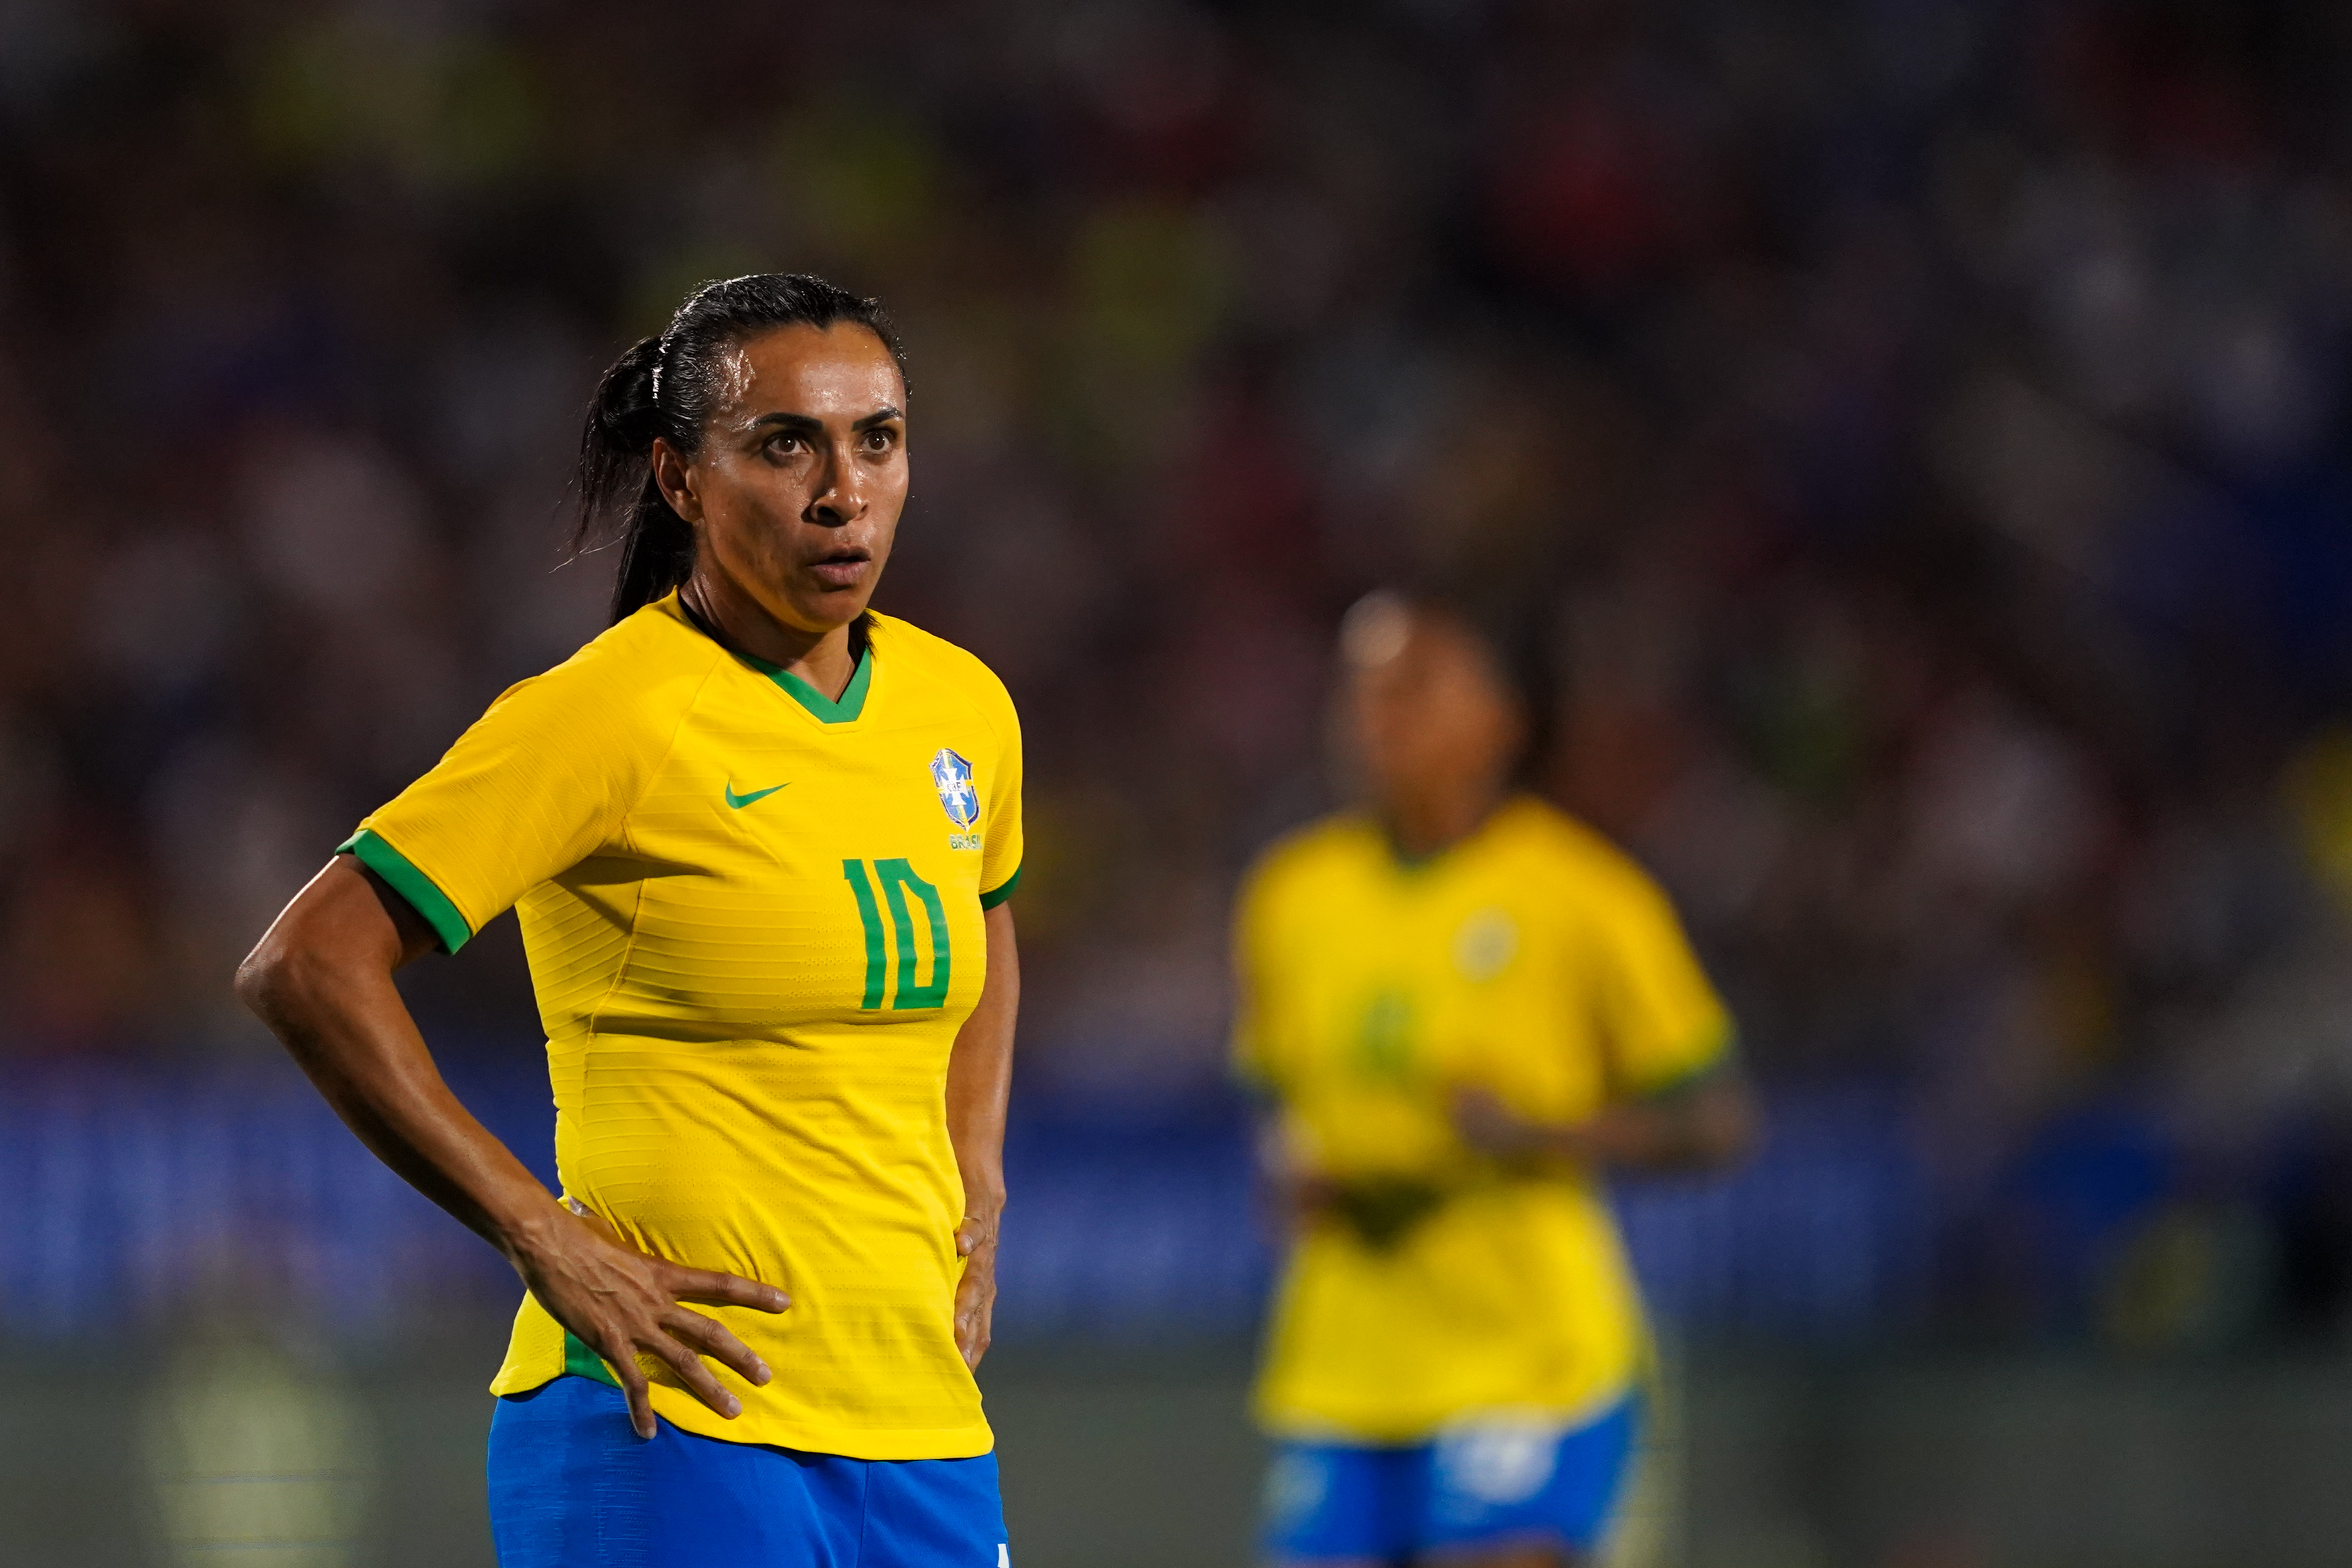 Brazil's Olympic women's football team, led by Marta and Formiga